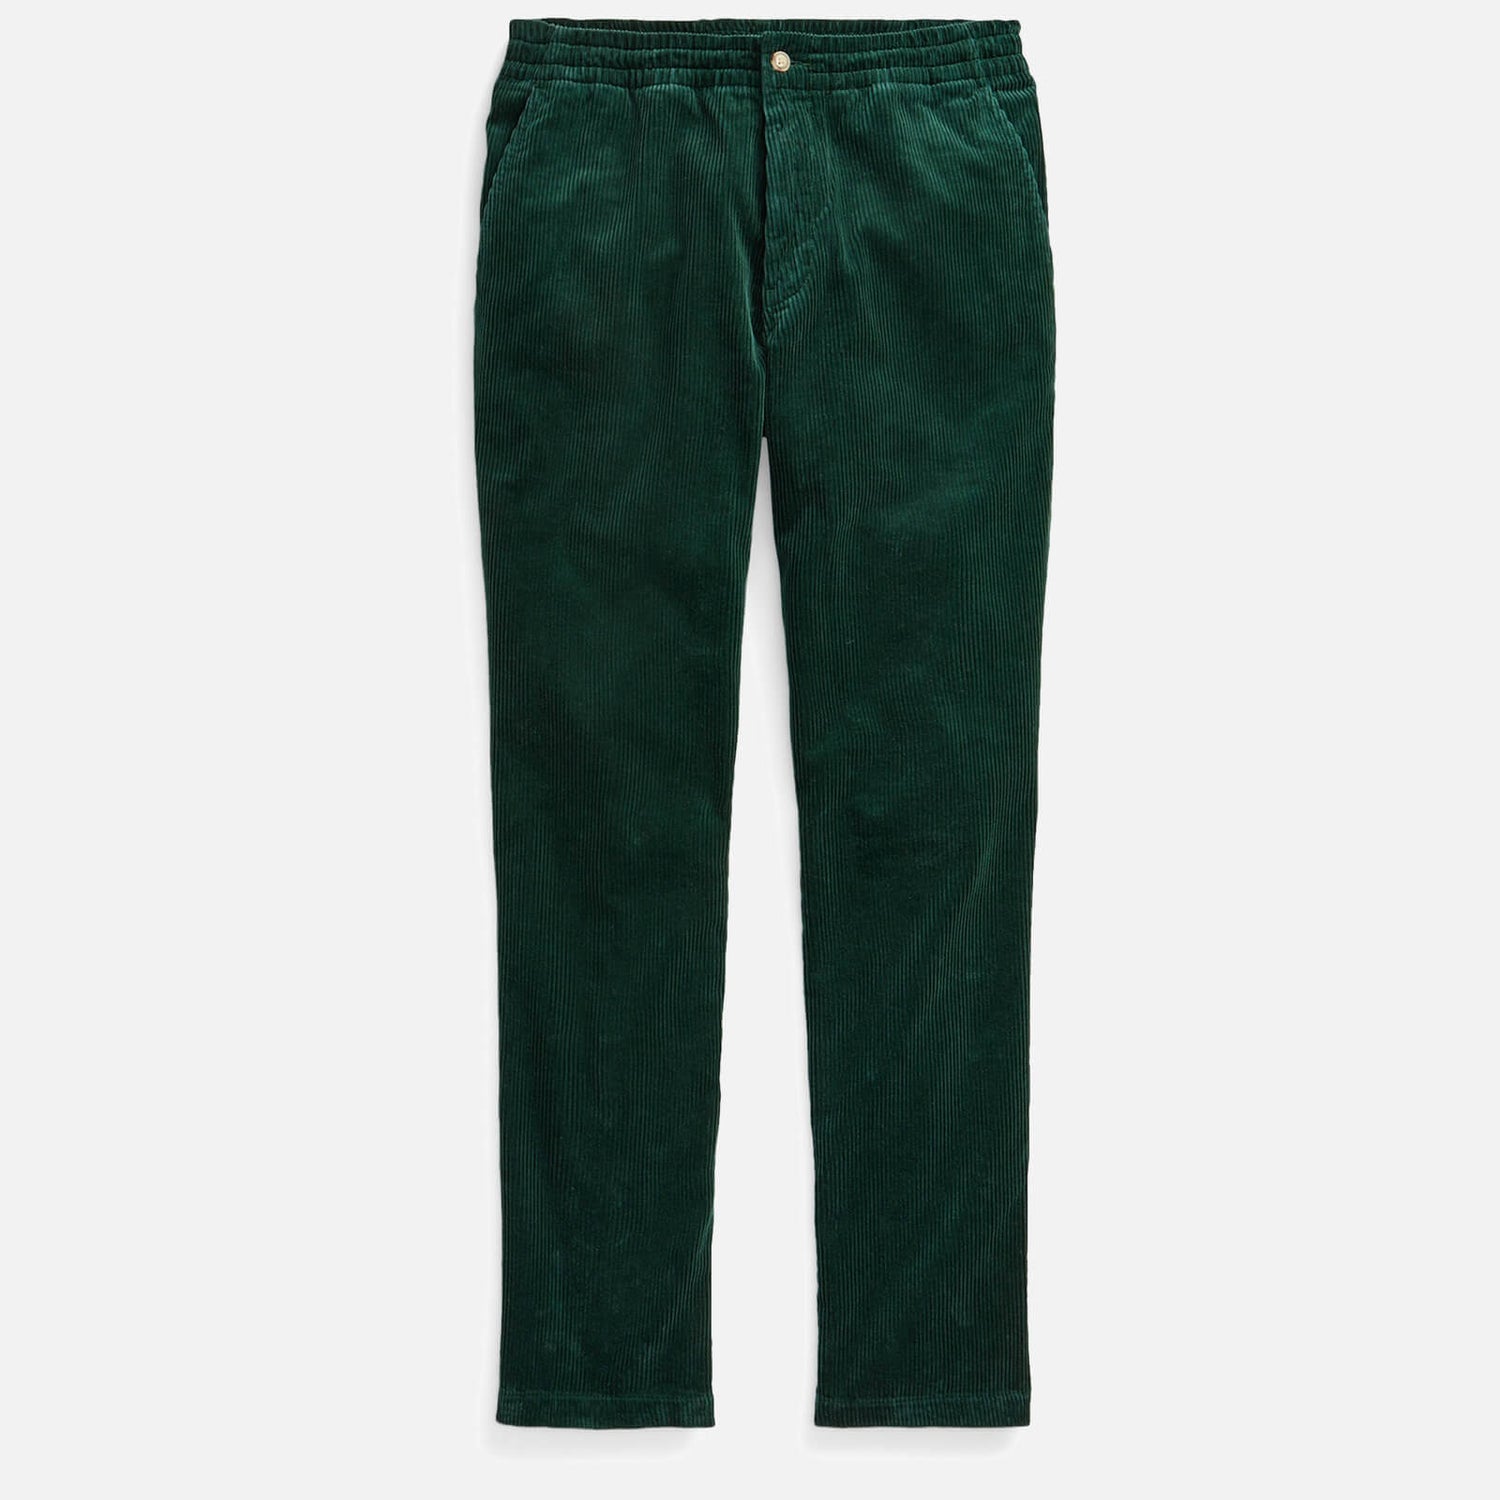 Polo Ralph Lauren Men's Corduroy Prepster Trousers - College Green - L